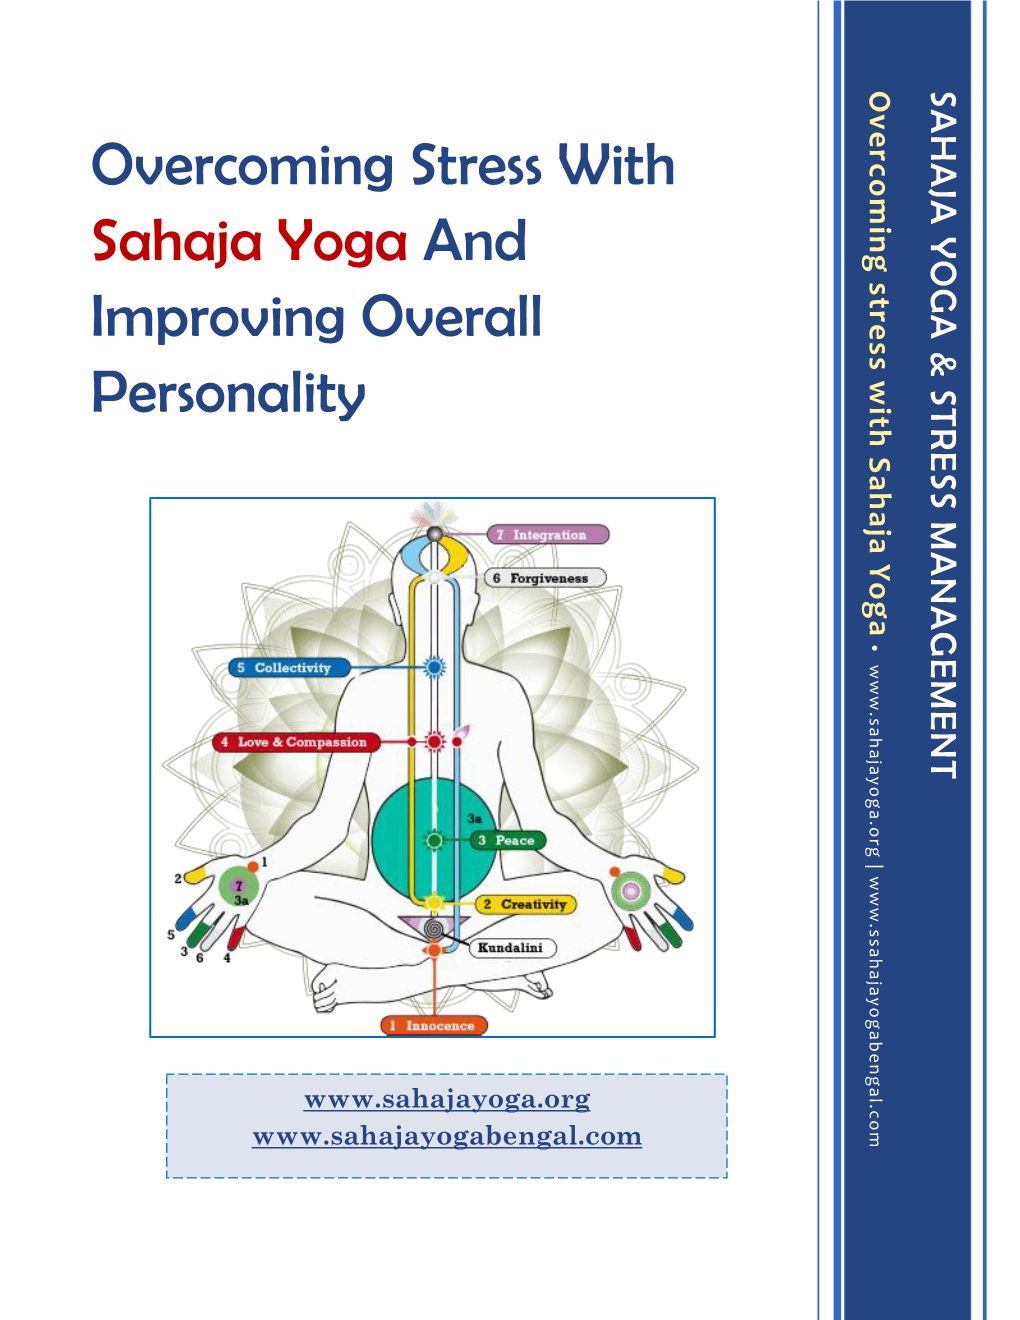 Overcoming Stress with Sahaja Yoga and Improving Overall Personality